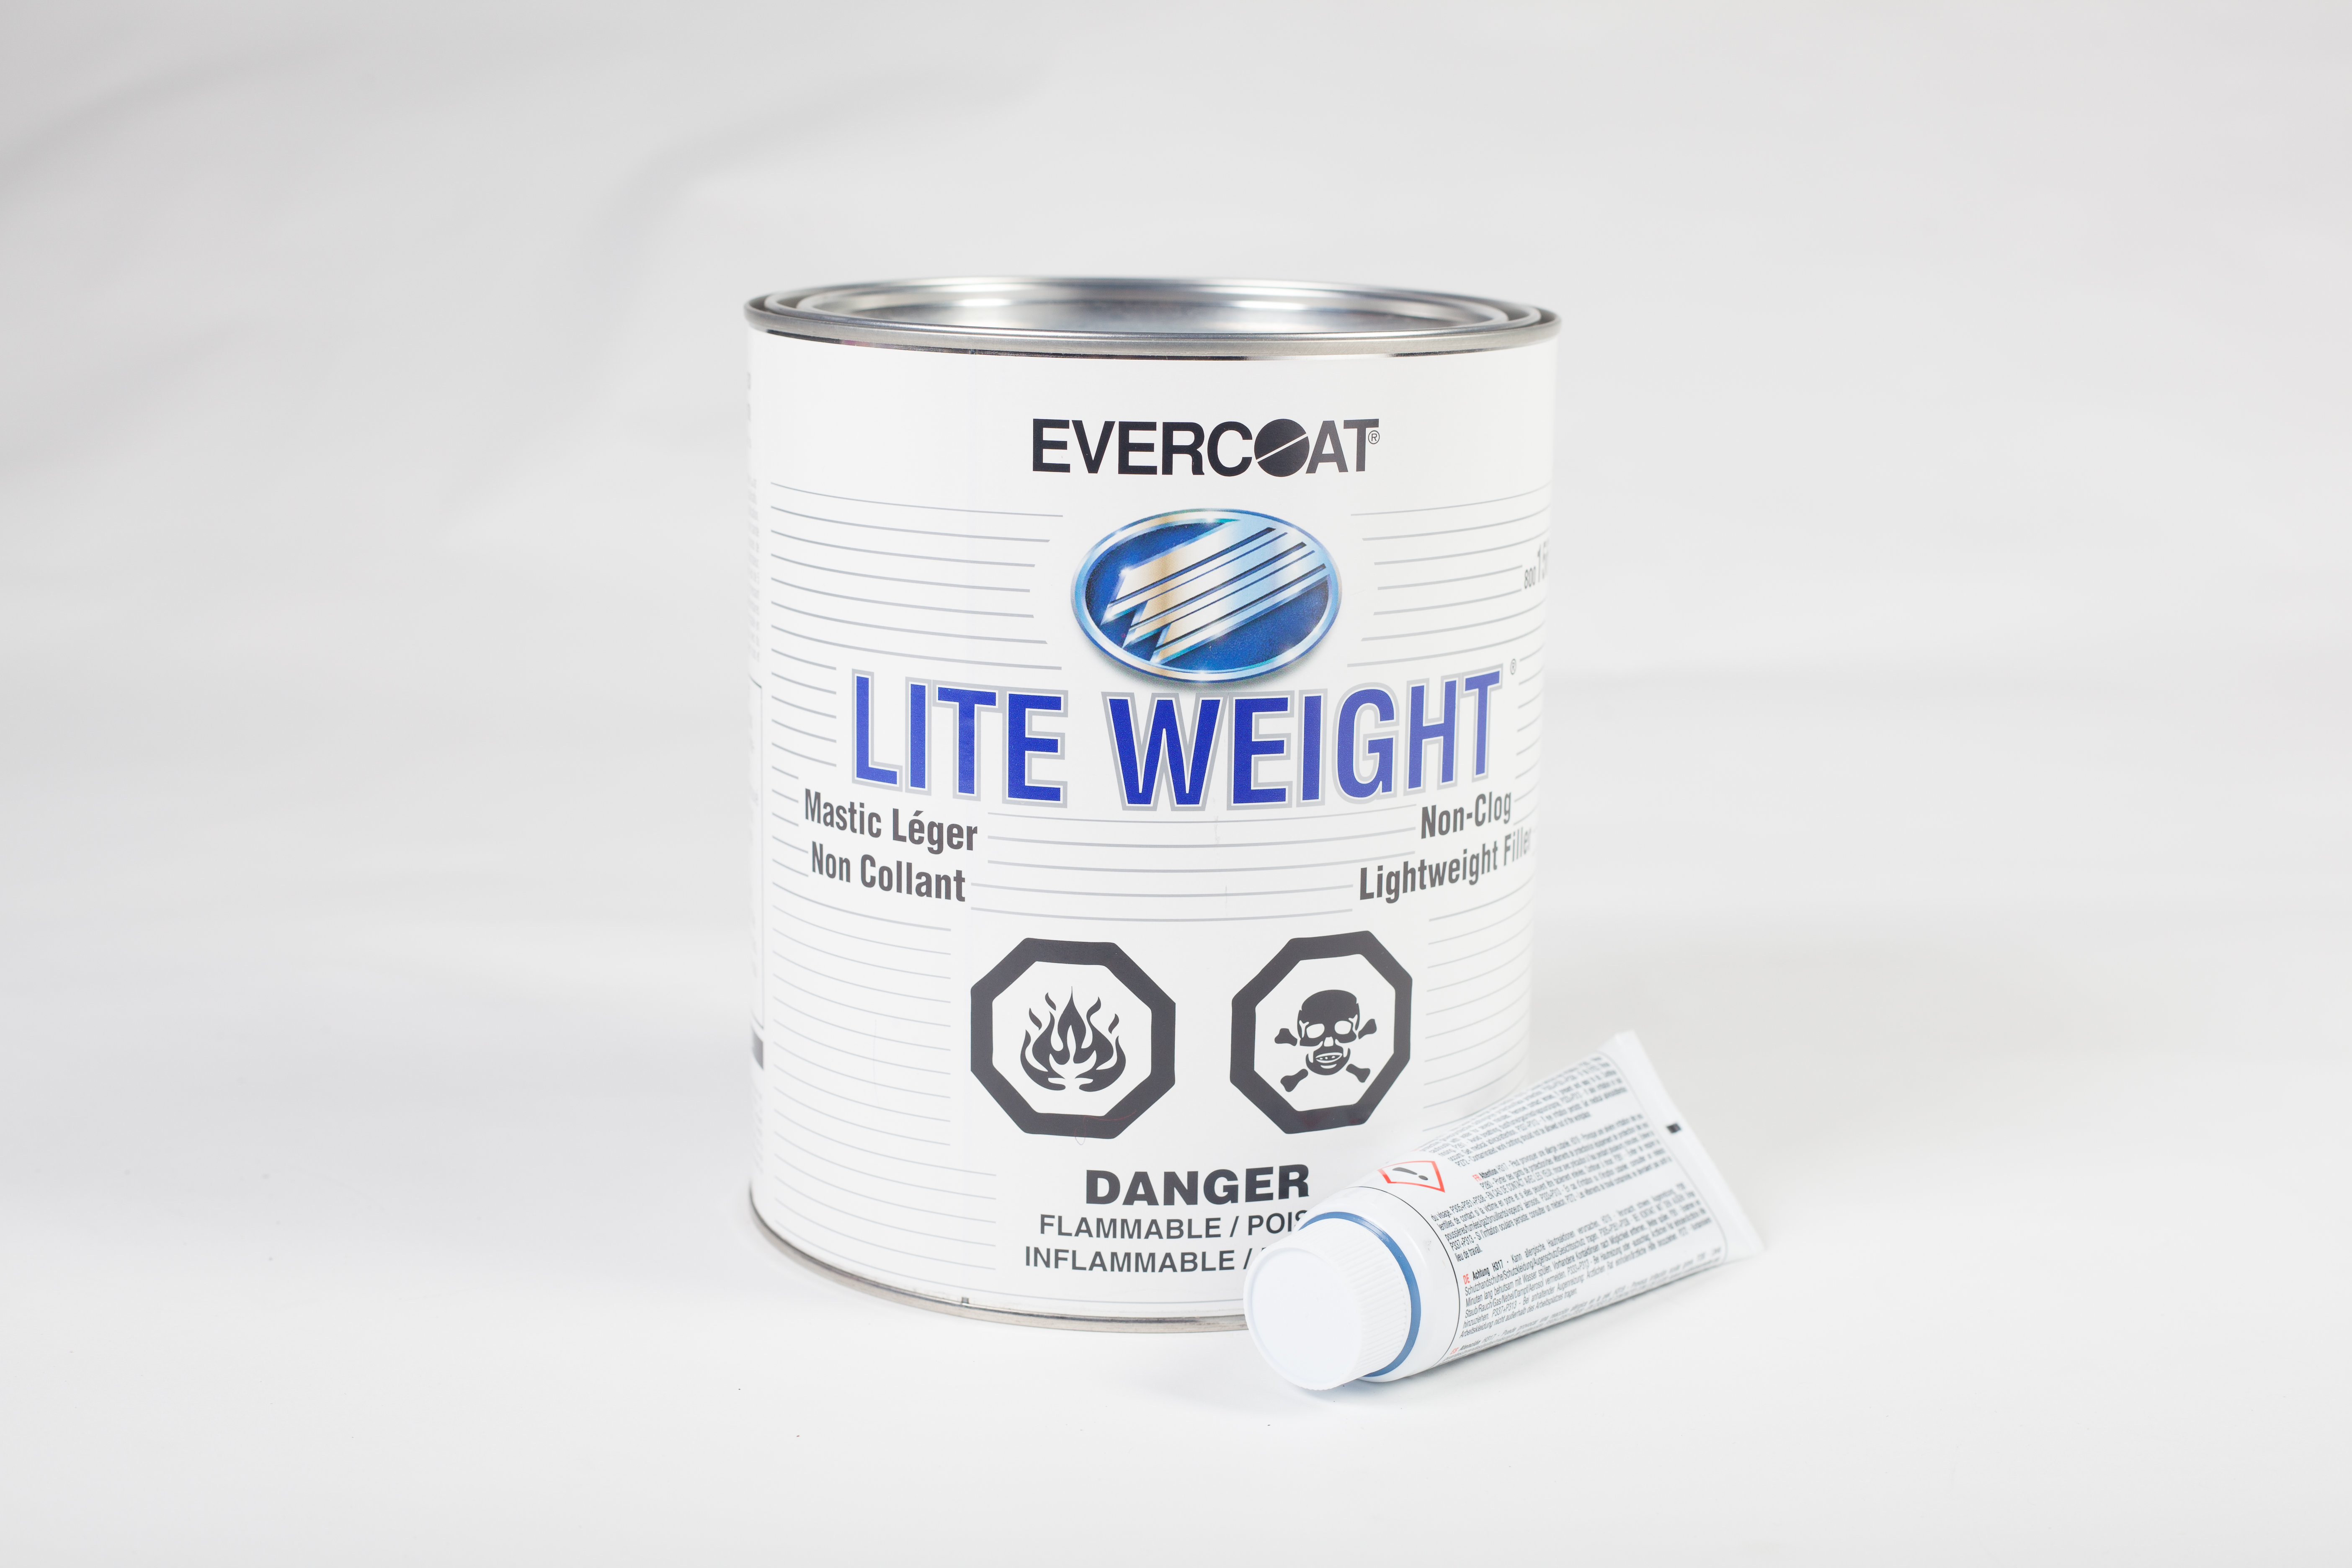 Evercoat 156 - Non-Clog Lightweight Body Filler